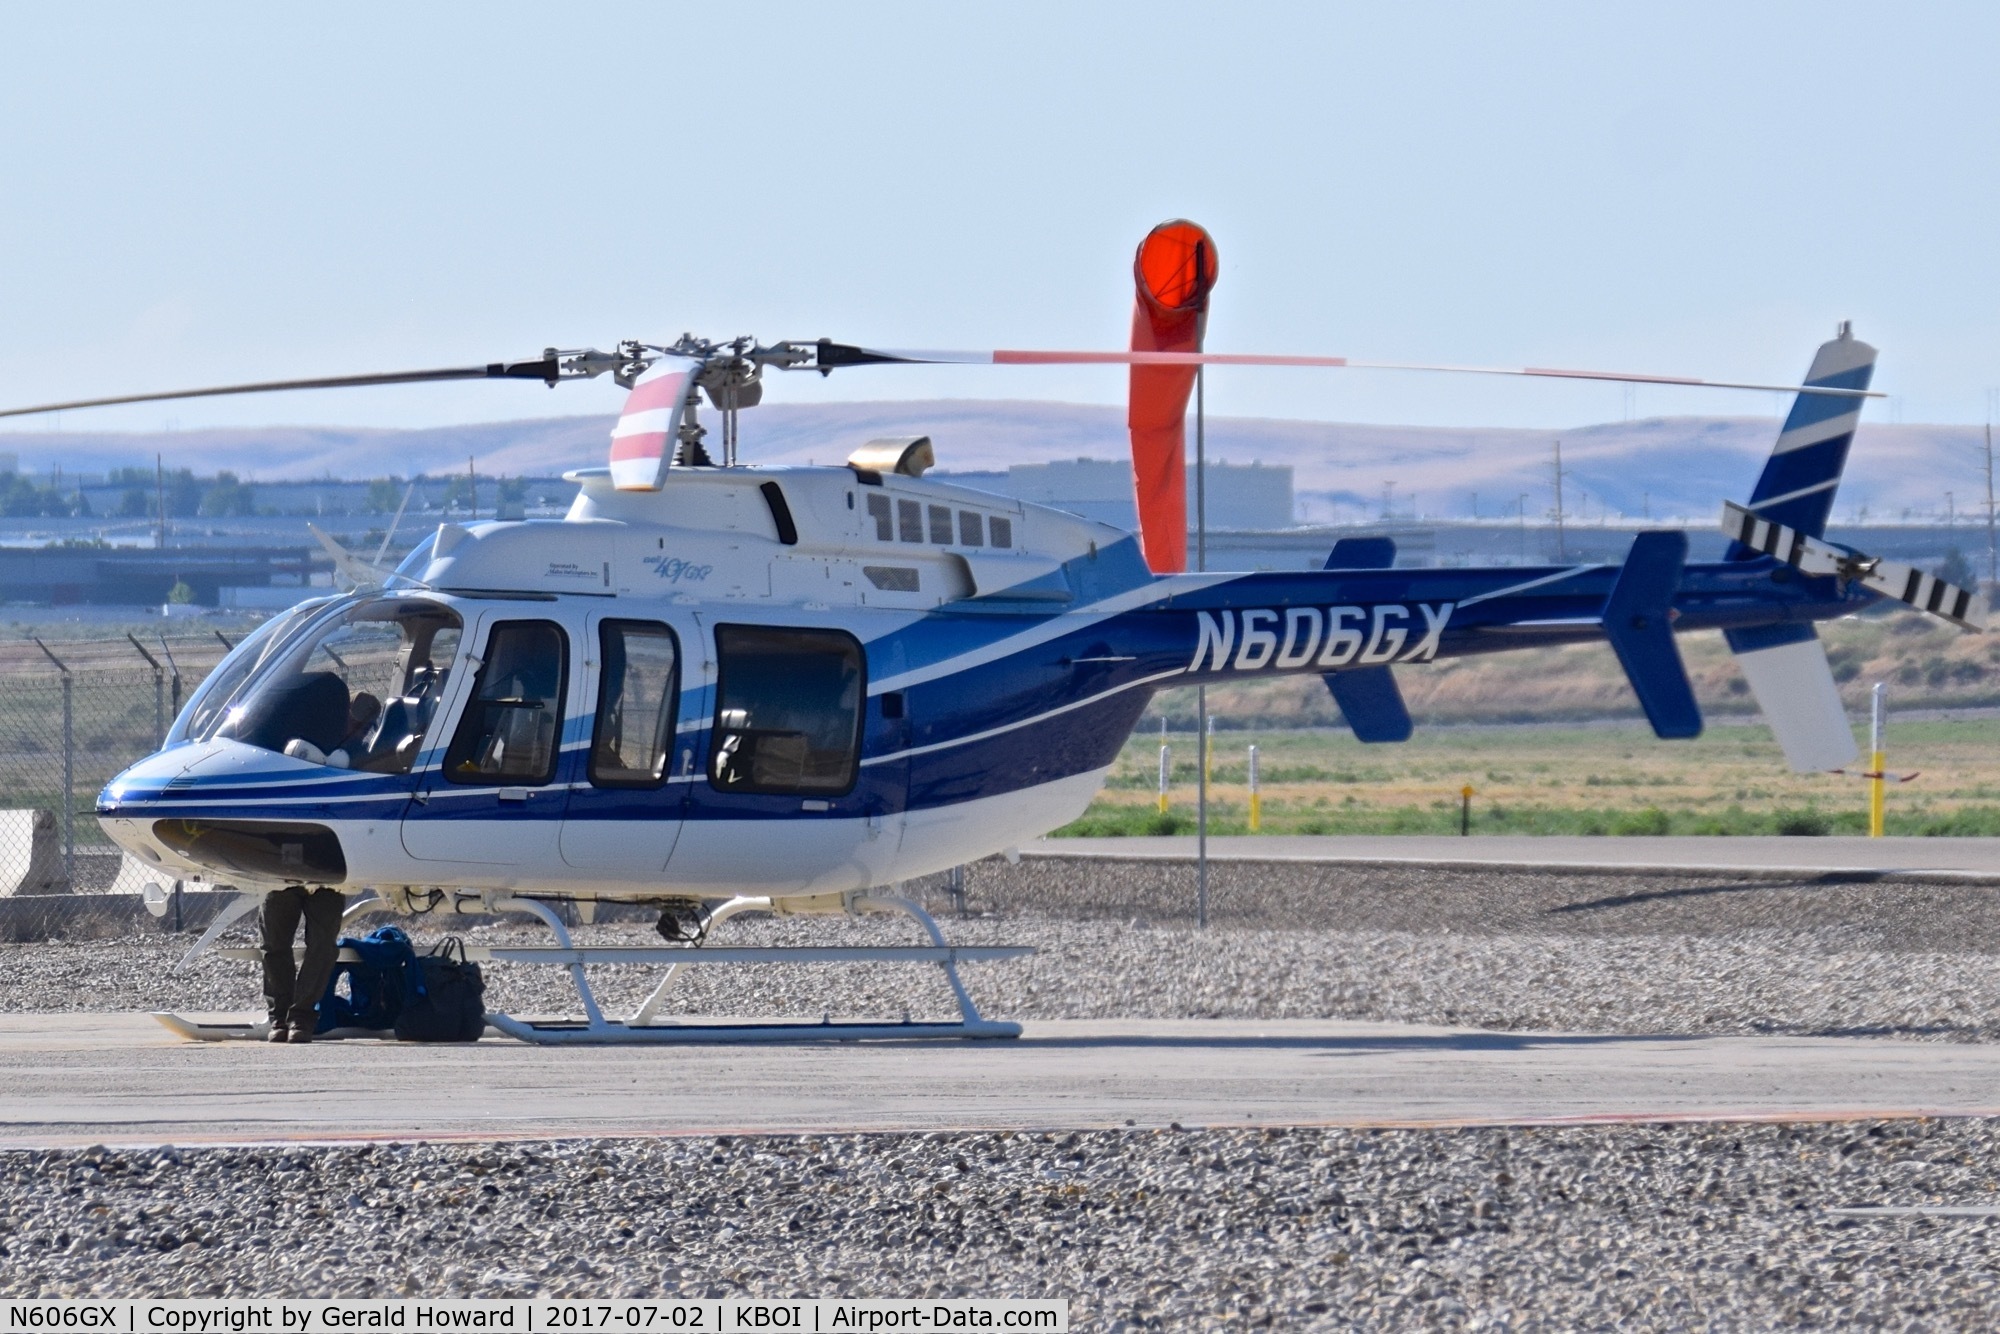 N606GX, 2015 Bell 407GTX C/N 54582, Parked on the BLM ramp.